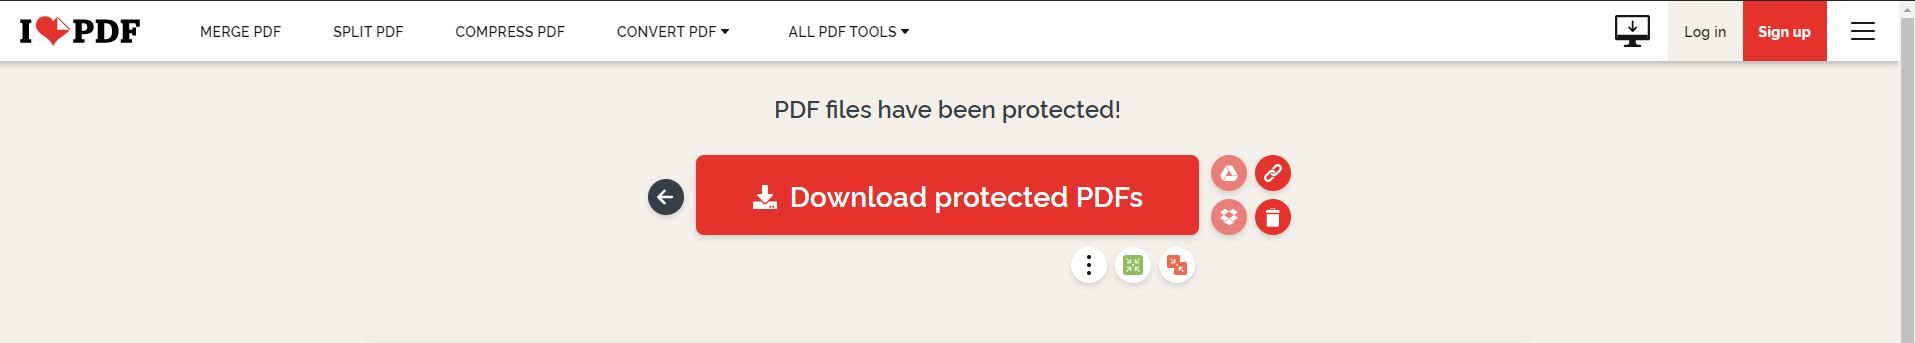 iLovePDF save protected file